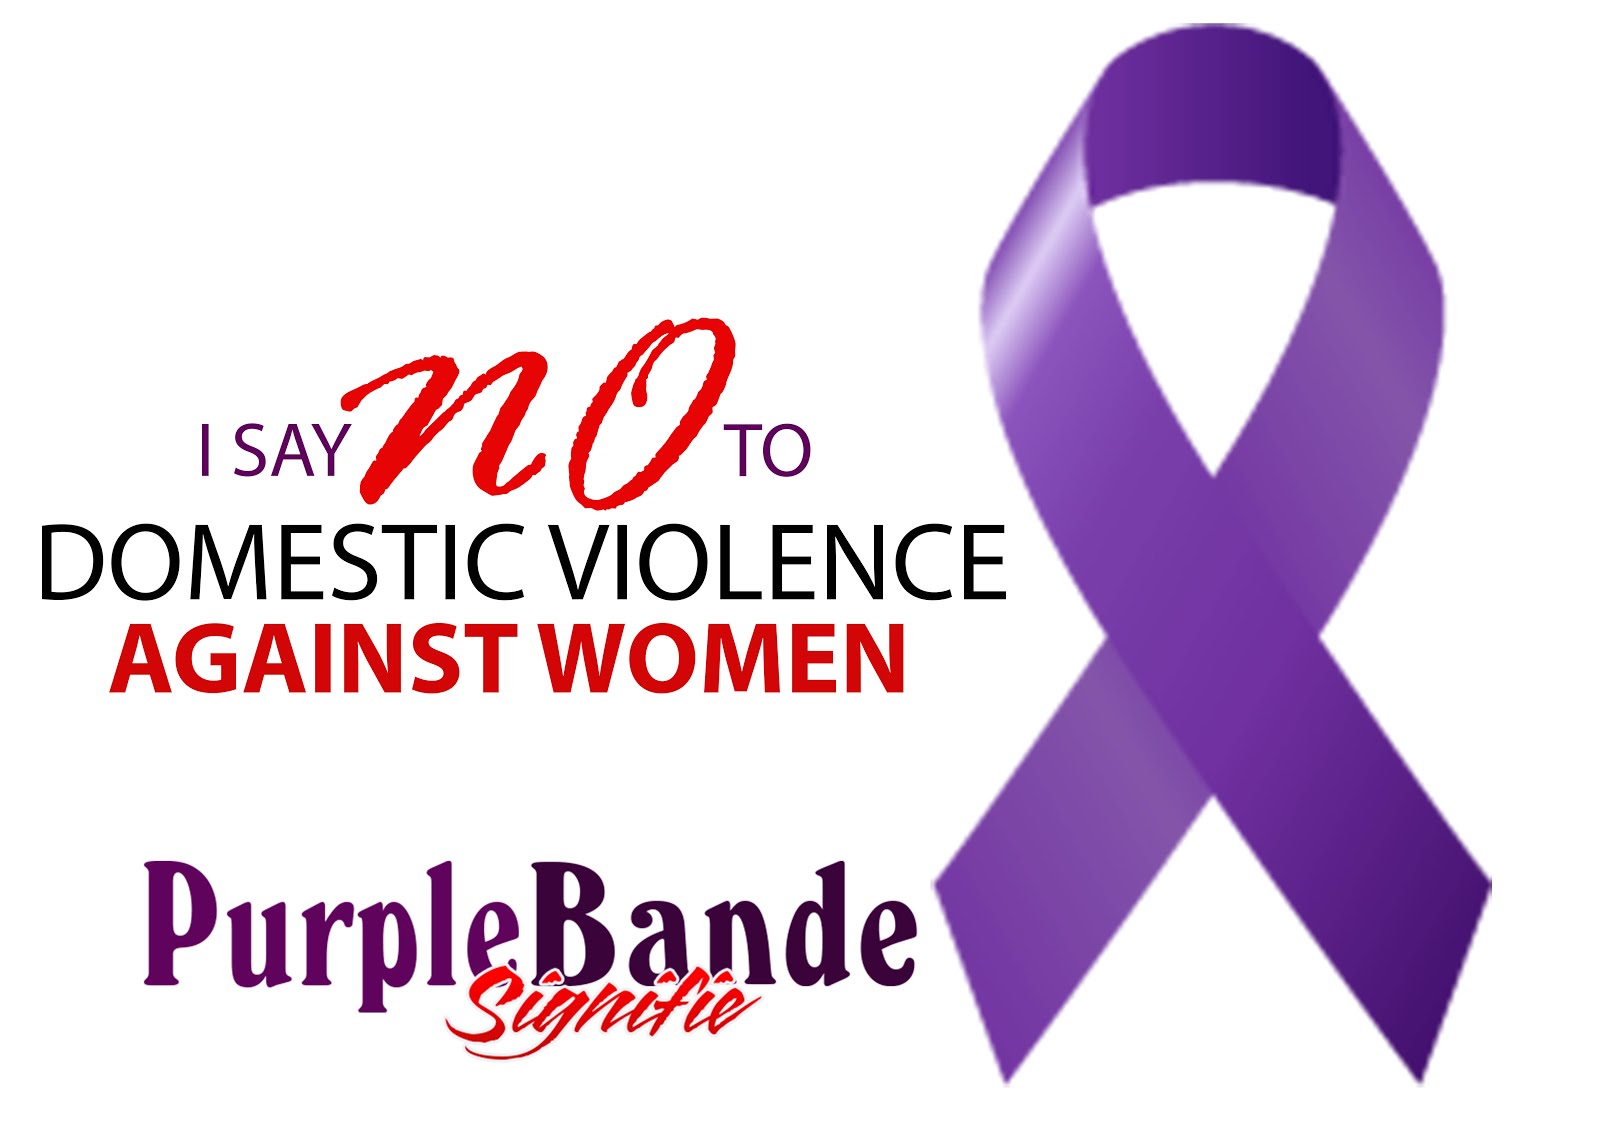 say "NO" to Domestic Violence